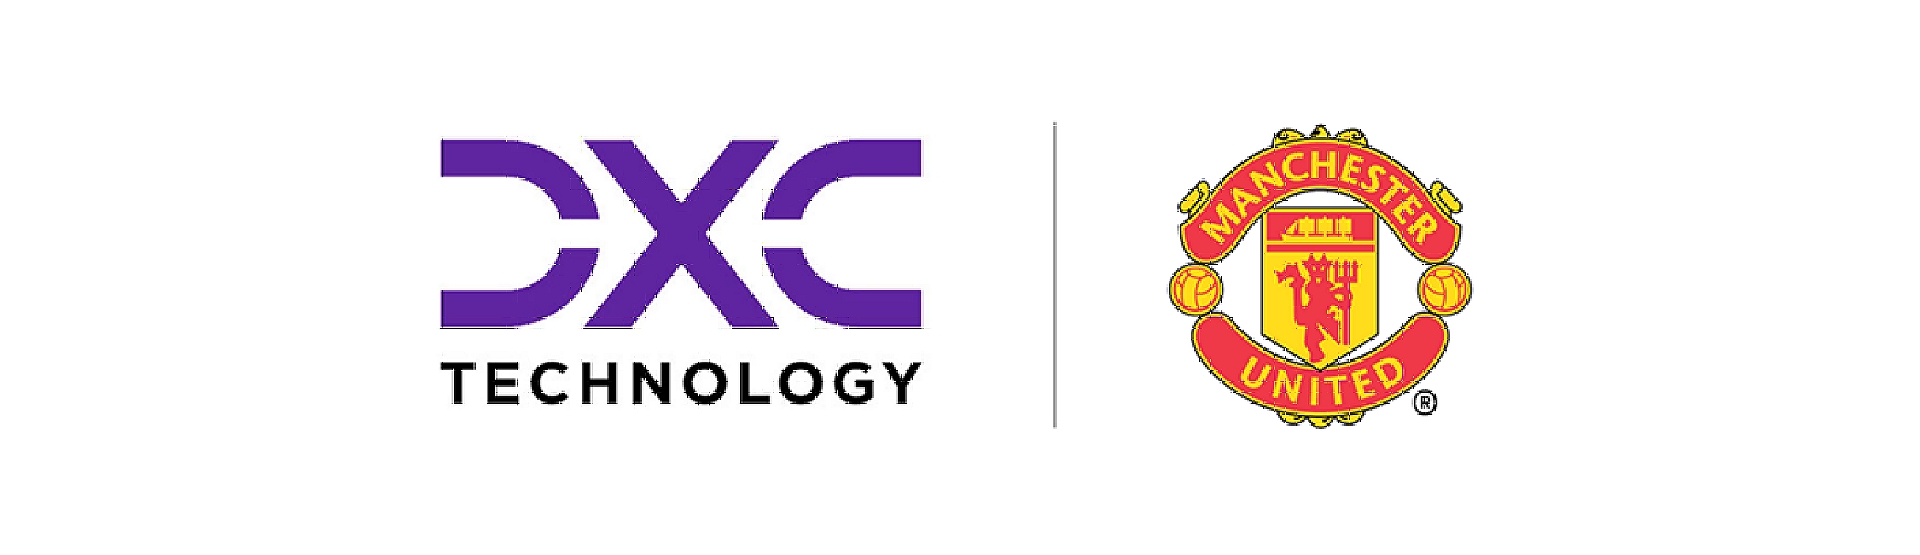 DXC-Manchester United logo lockup